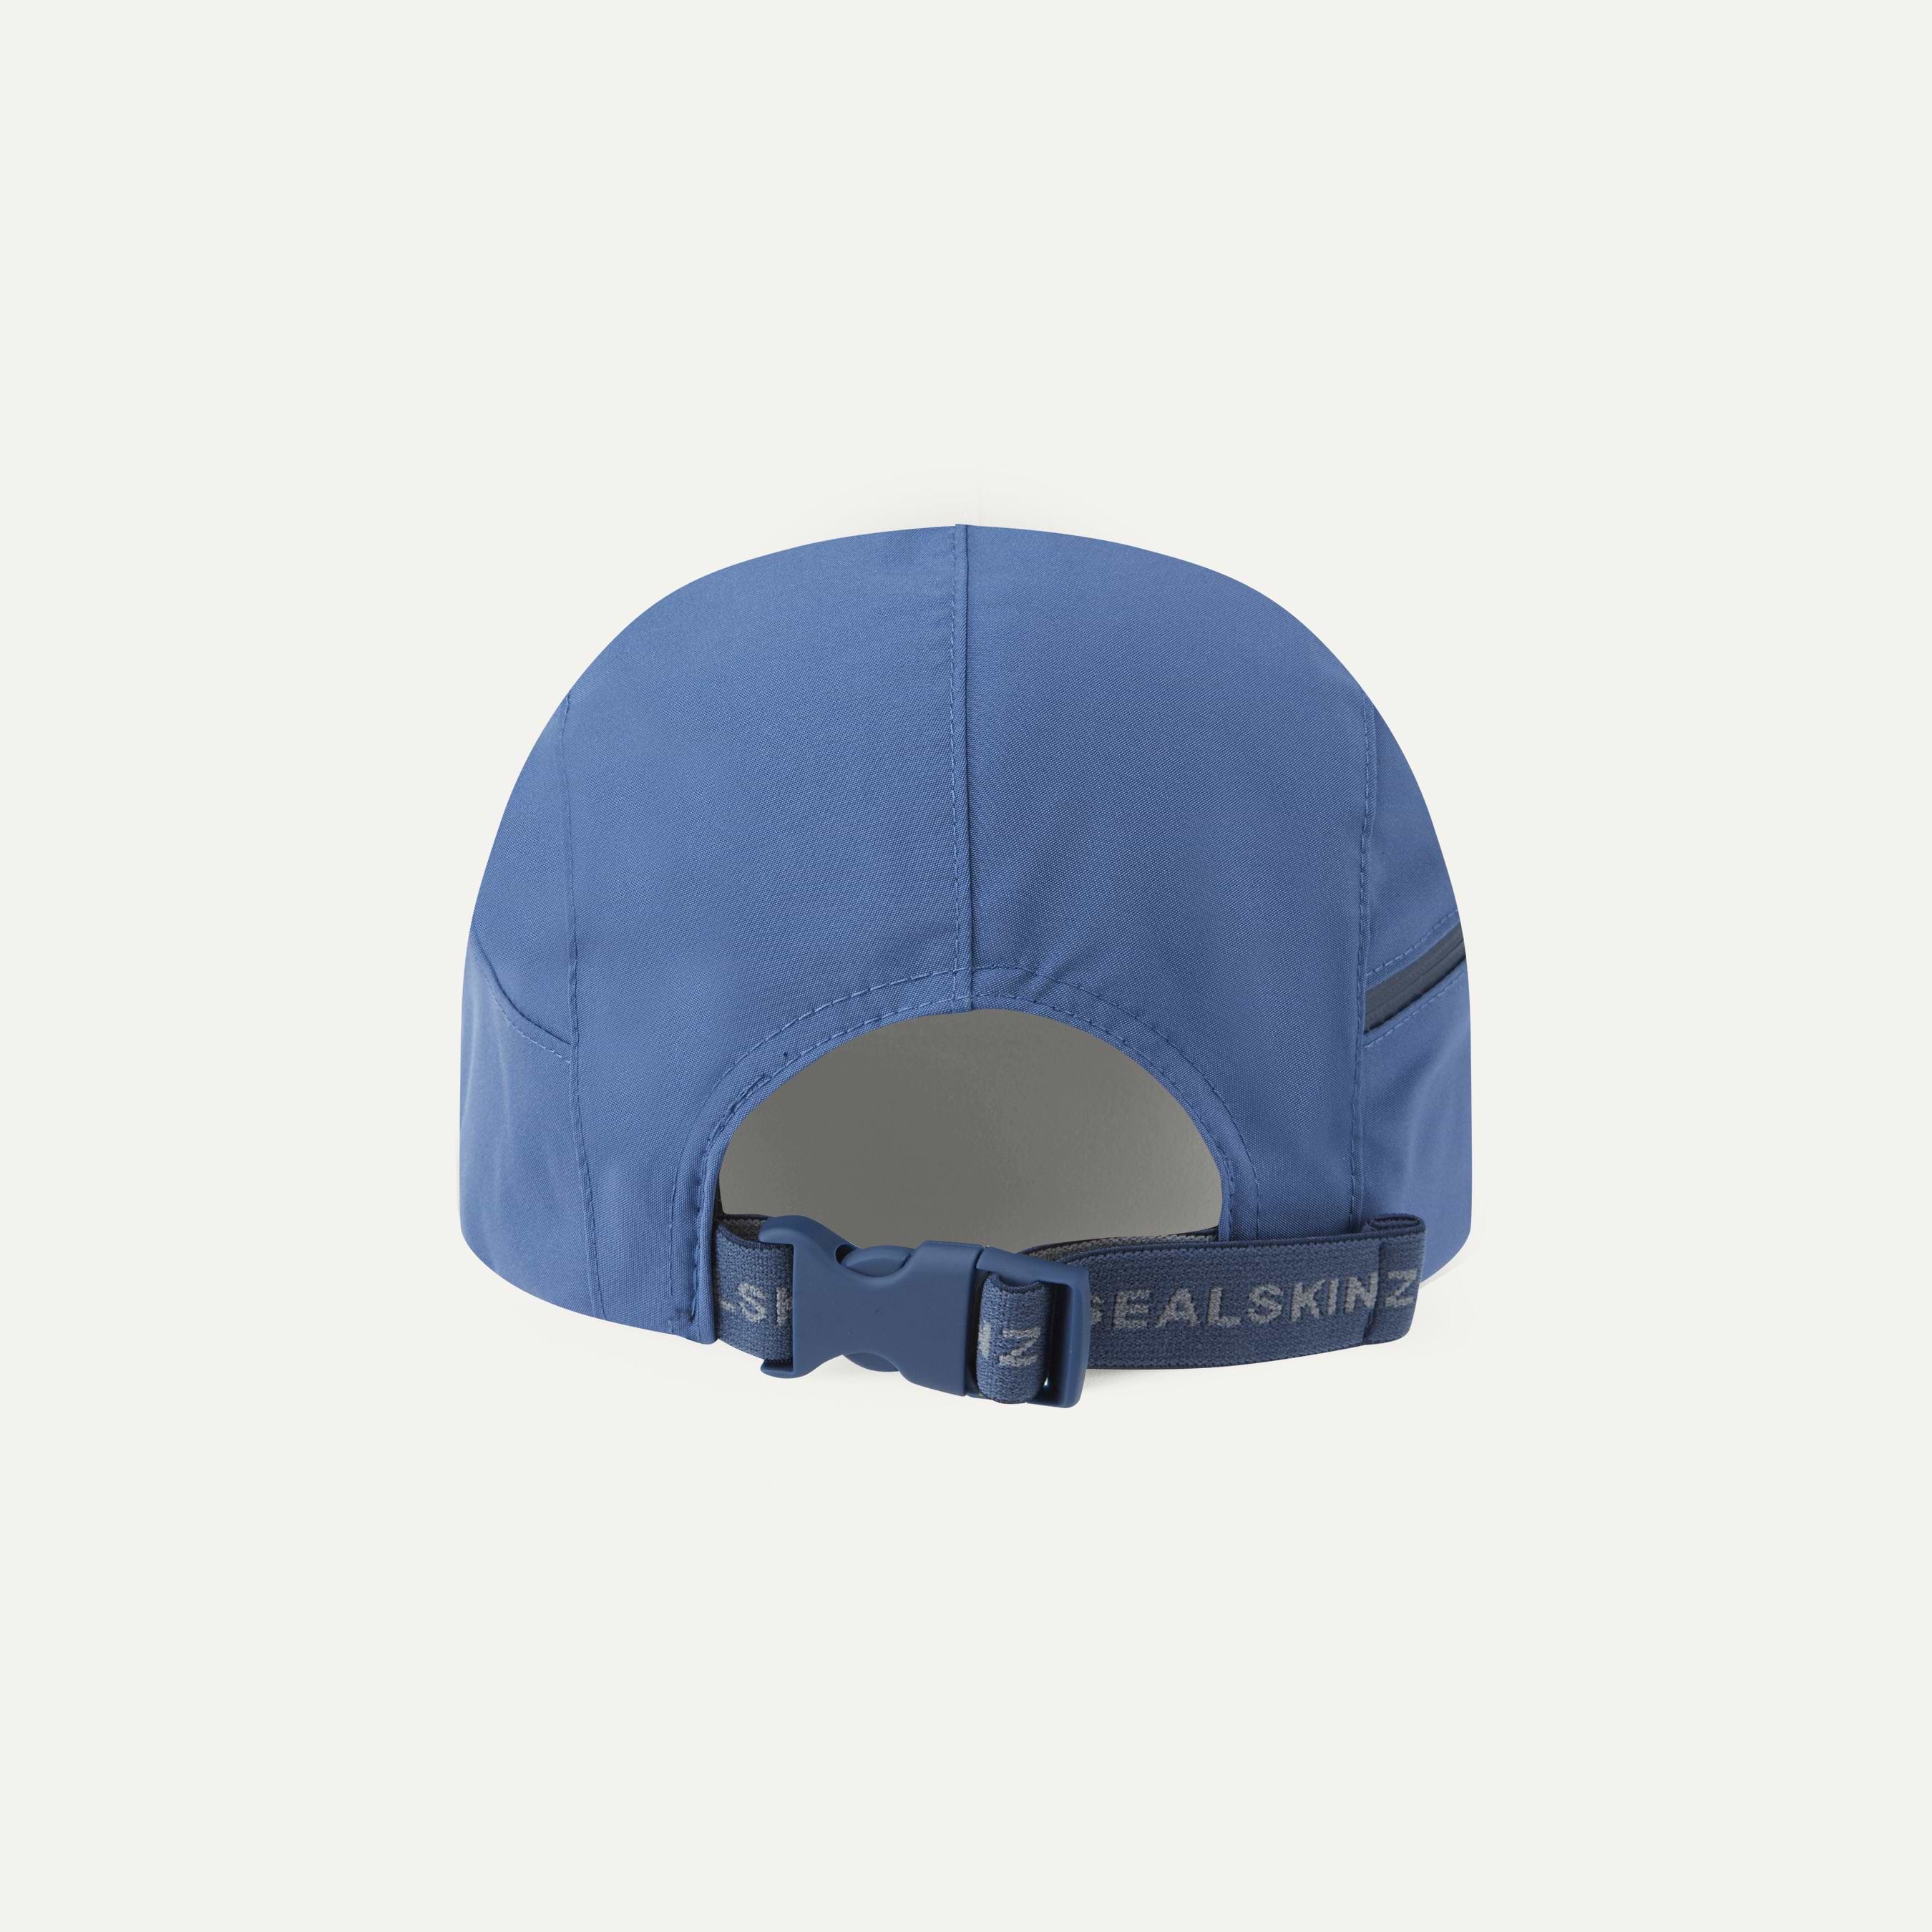 Men's waterproof baseball cap with zippered pocket